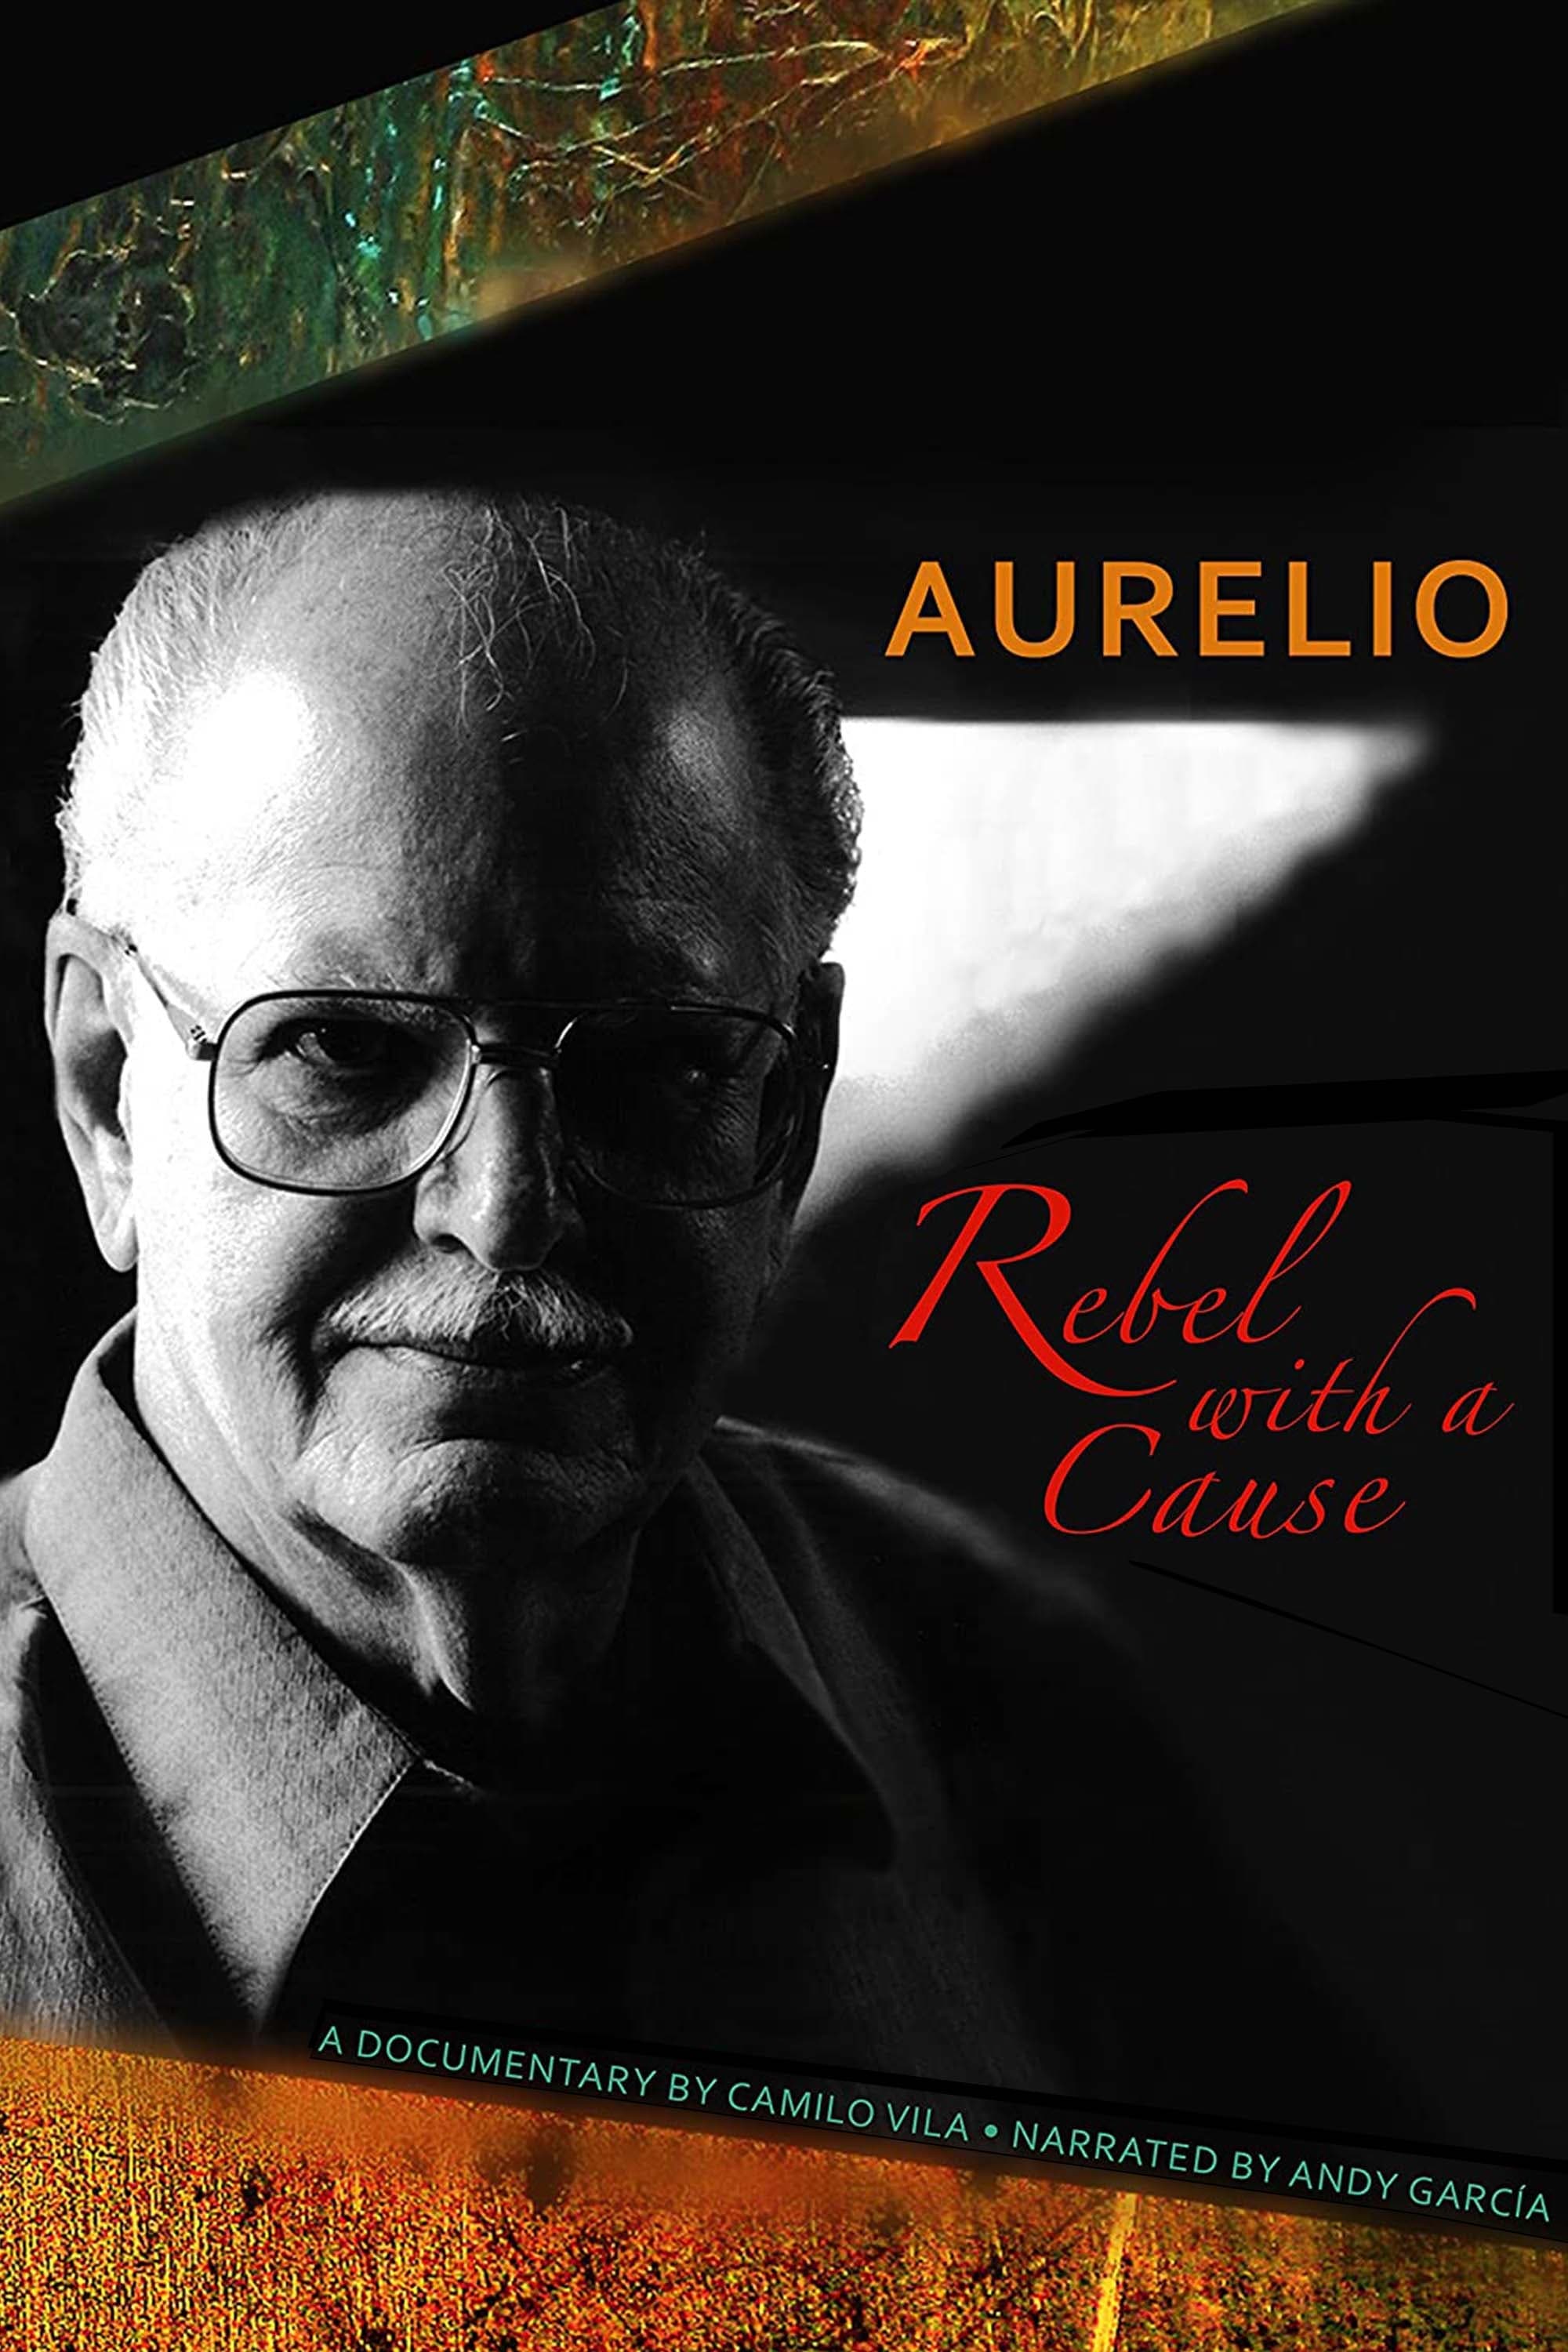 Aurelio: A Rebel with a Cause